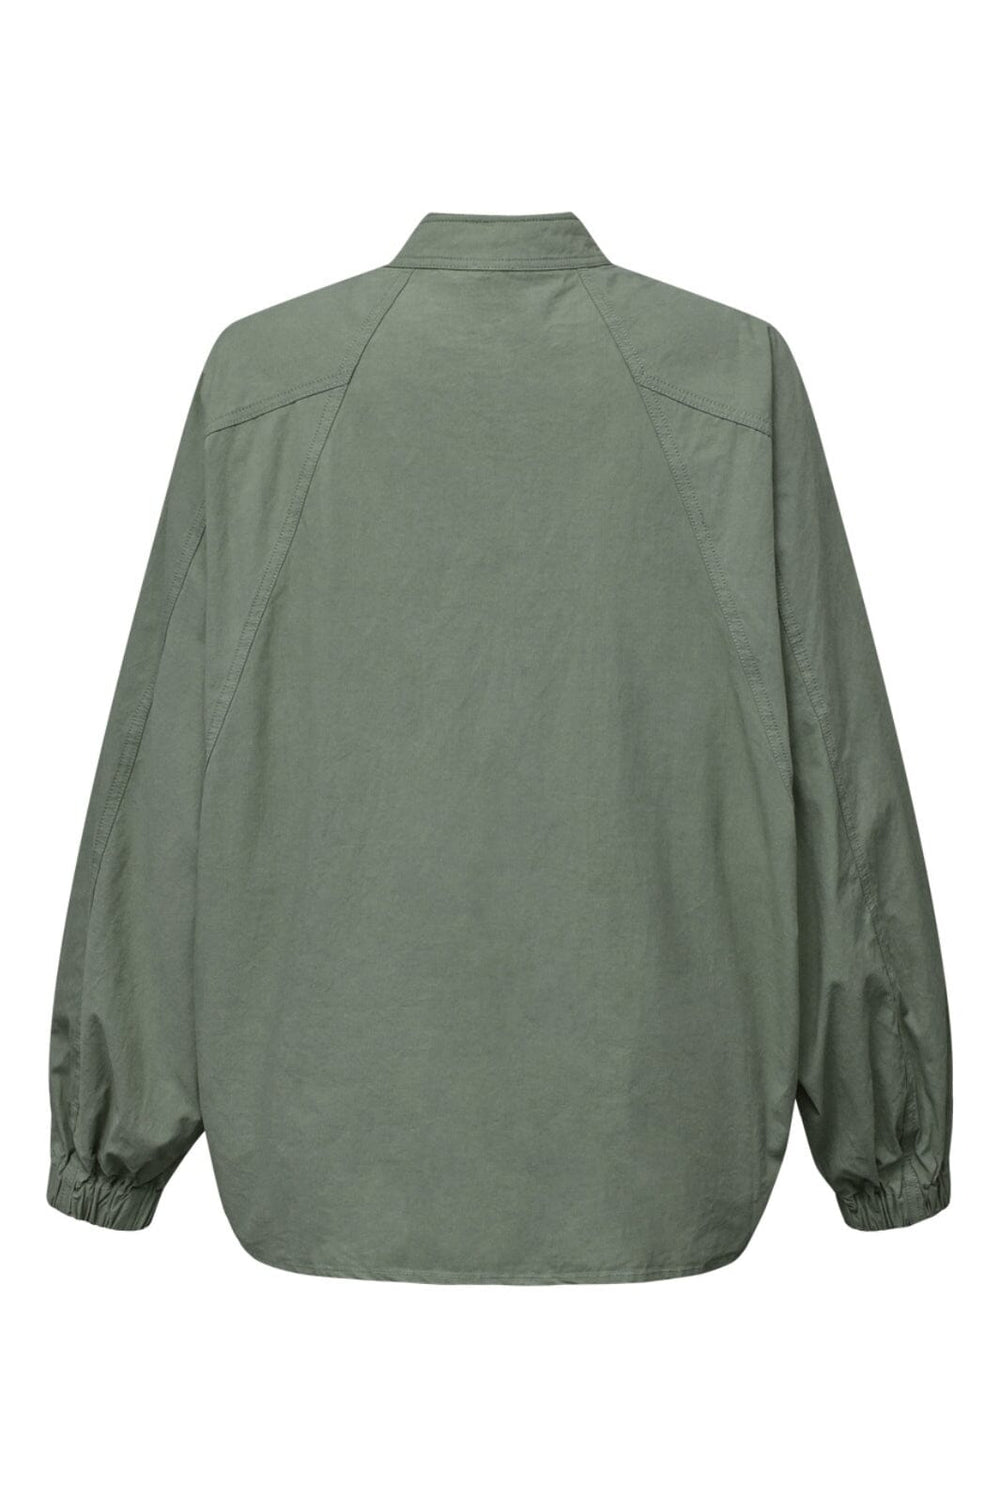 Gossia - BasmaGO Jacket Shirt - Dark Olive Jakker 